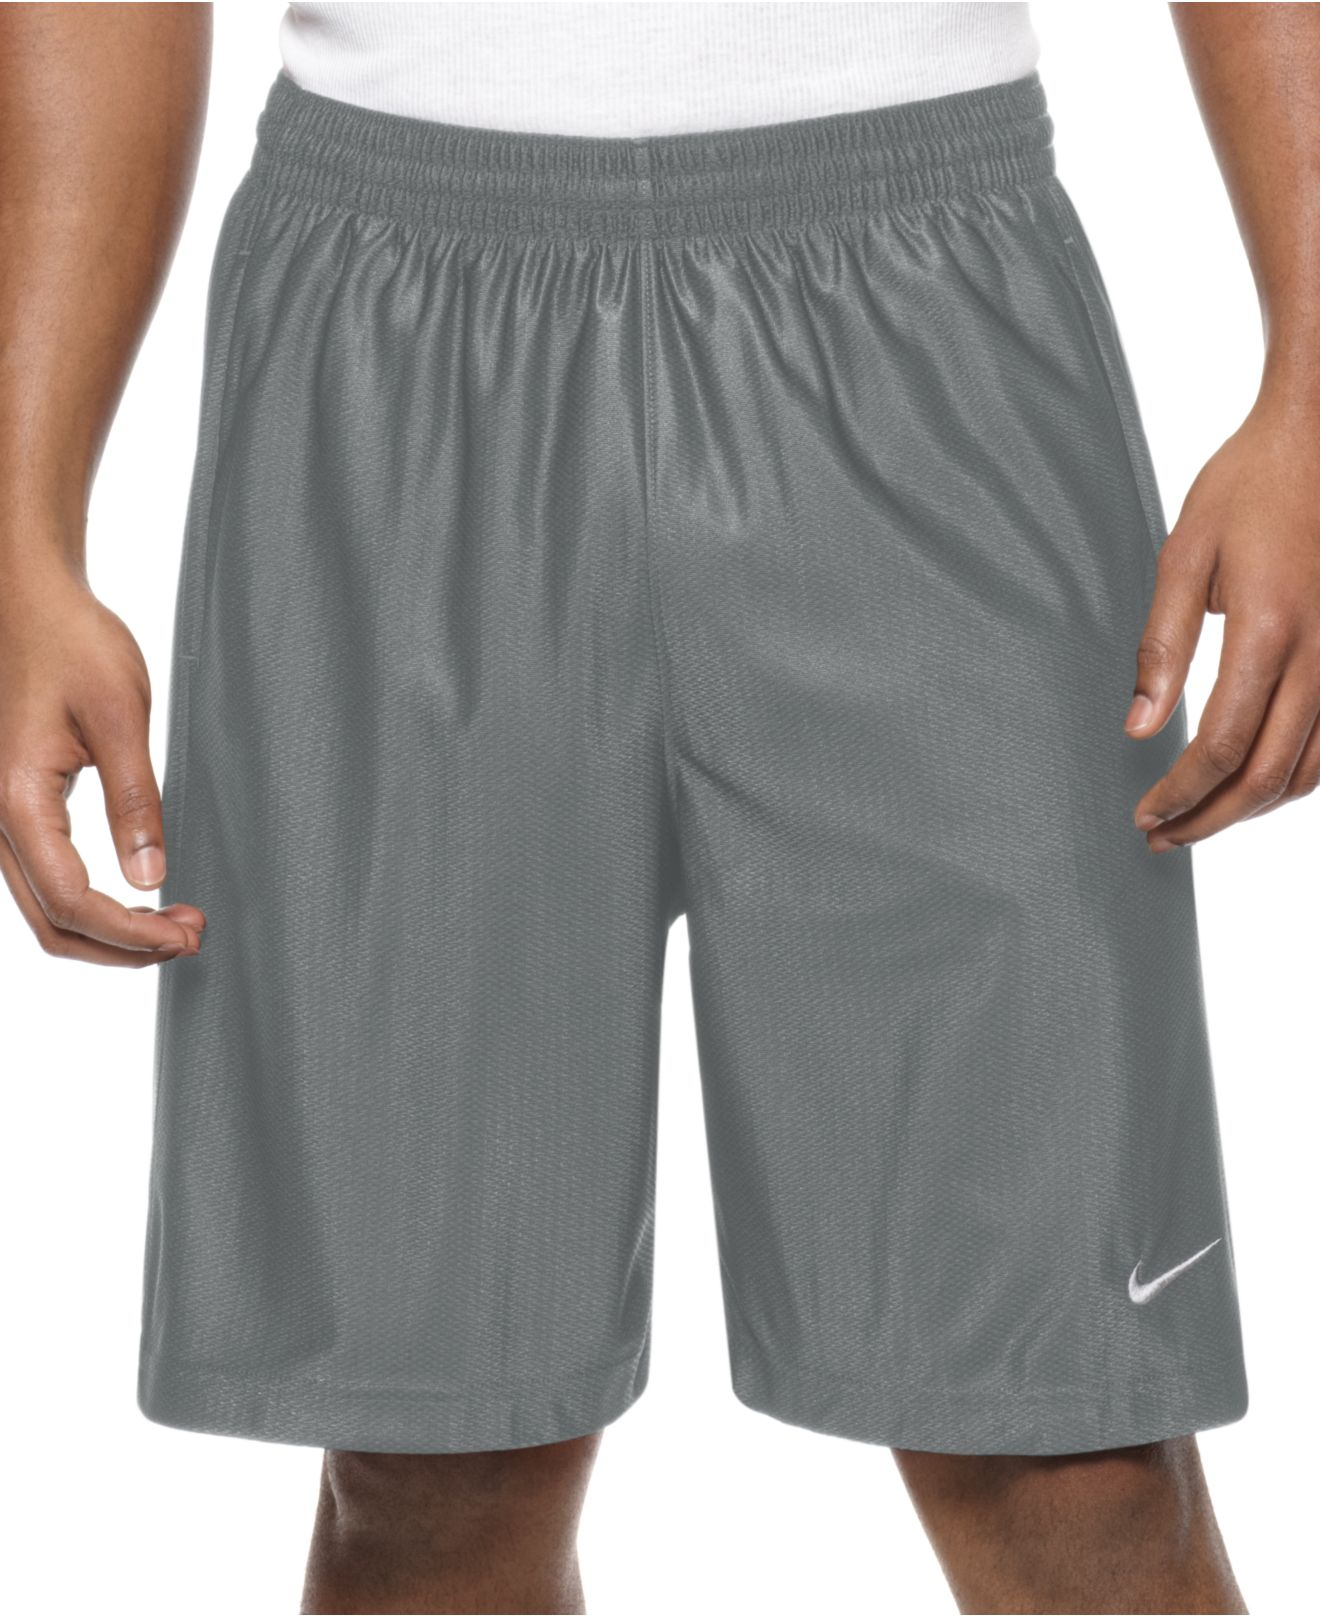 Lyst - Nike Zone Mesh Basketball Shorts in Metallic for Men